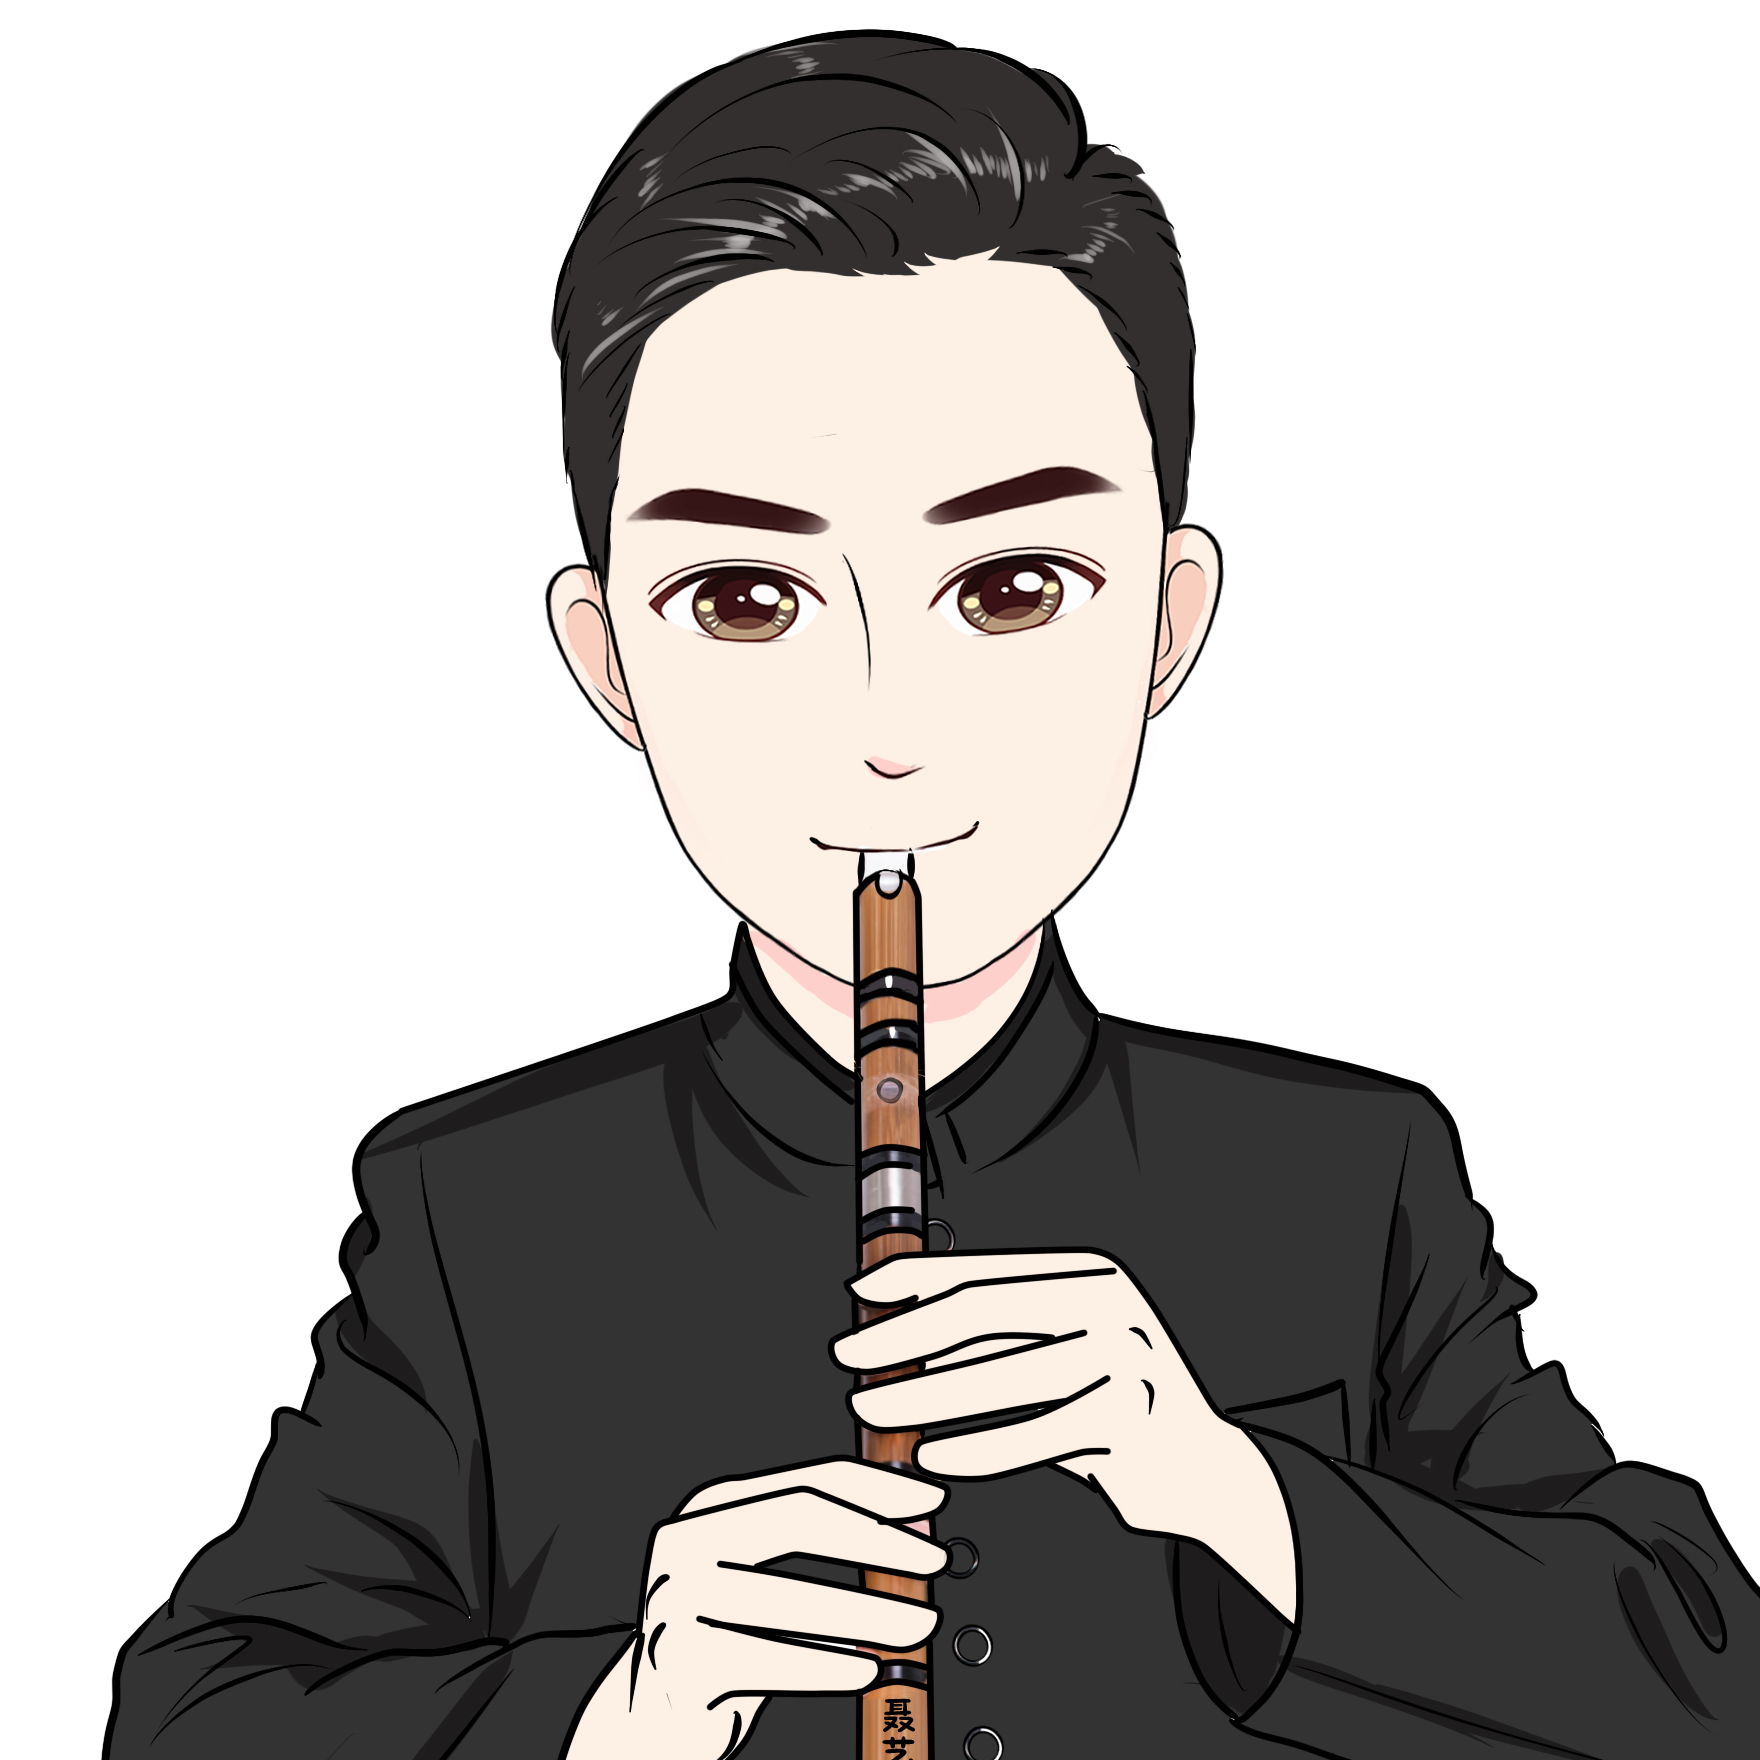 Les garçons de flûte | 吹笛少年-世界名画欣赏